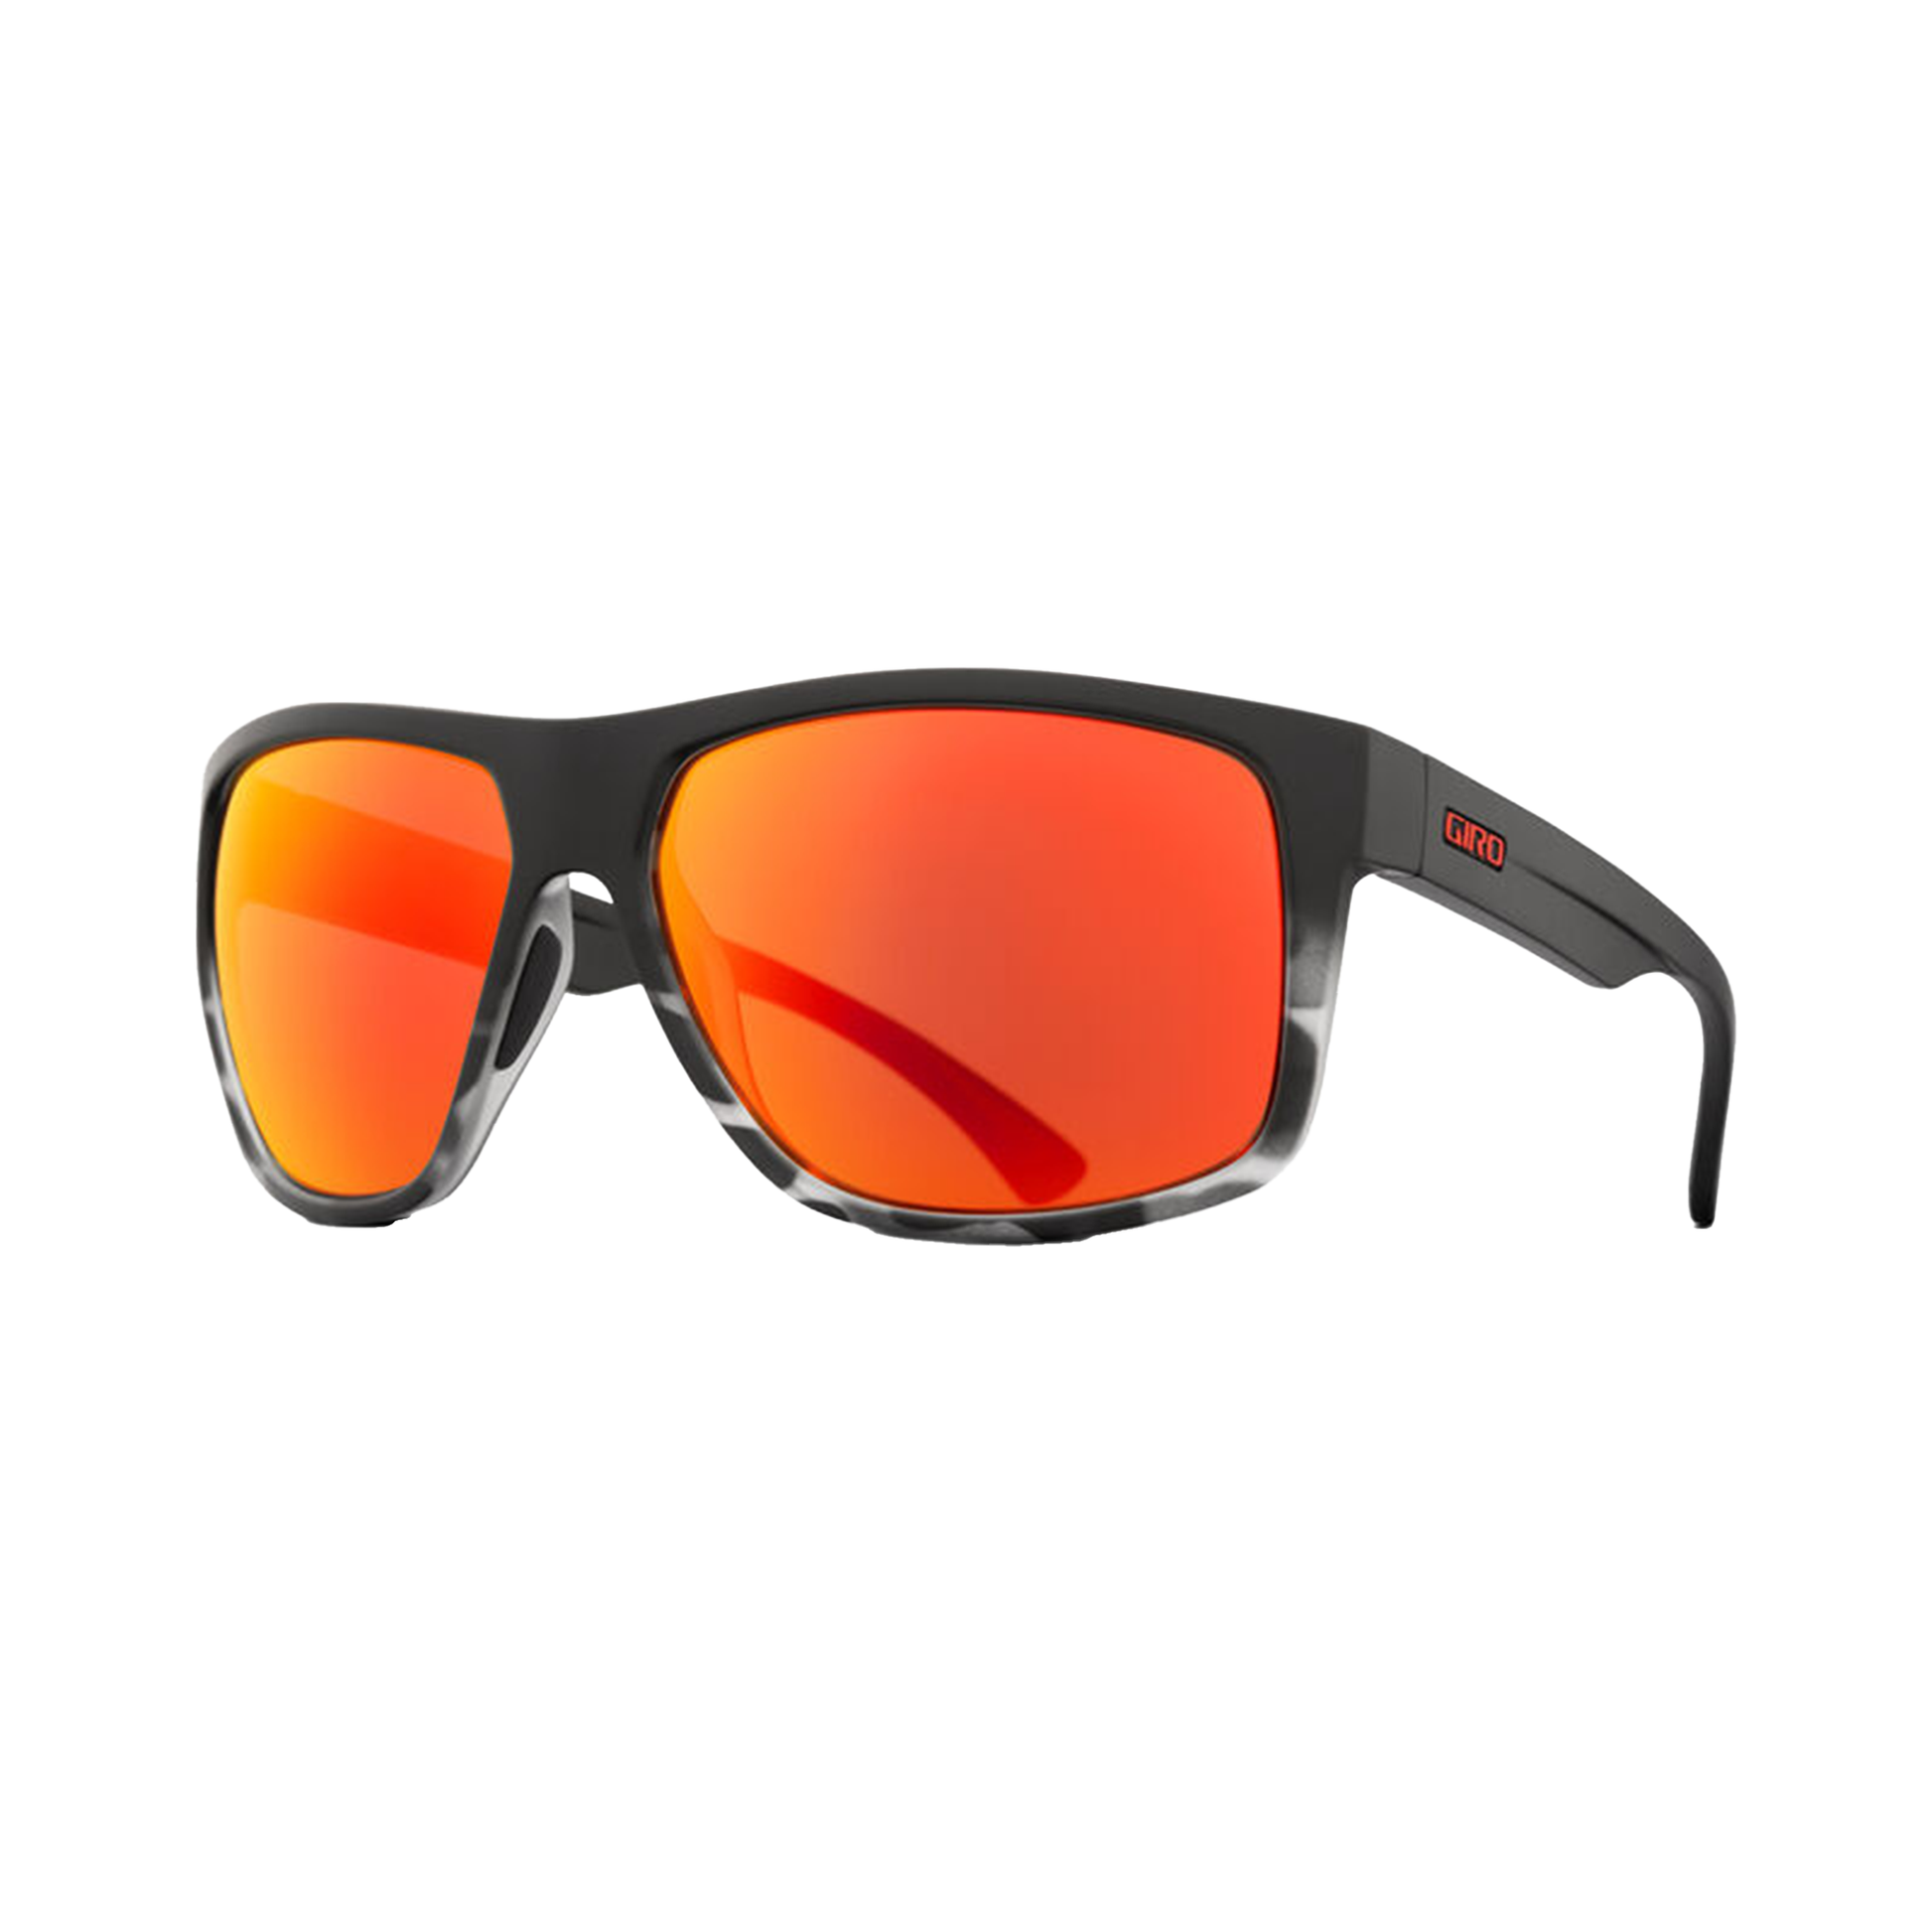 Giro Stark Sunglasses Matte Black Tortoise Fade VIVID Ember Sunglasses